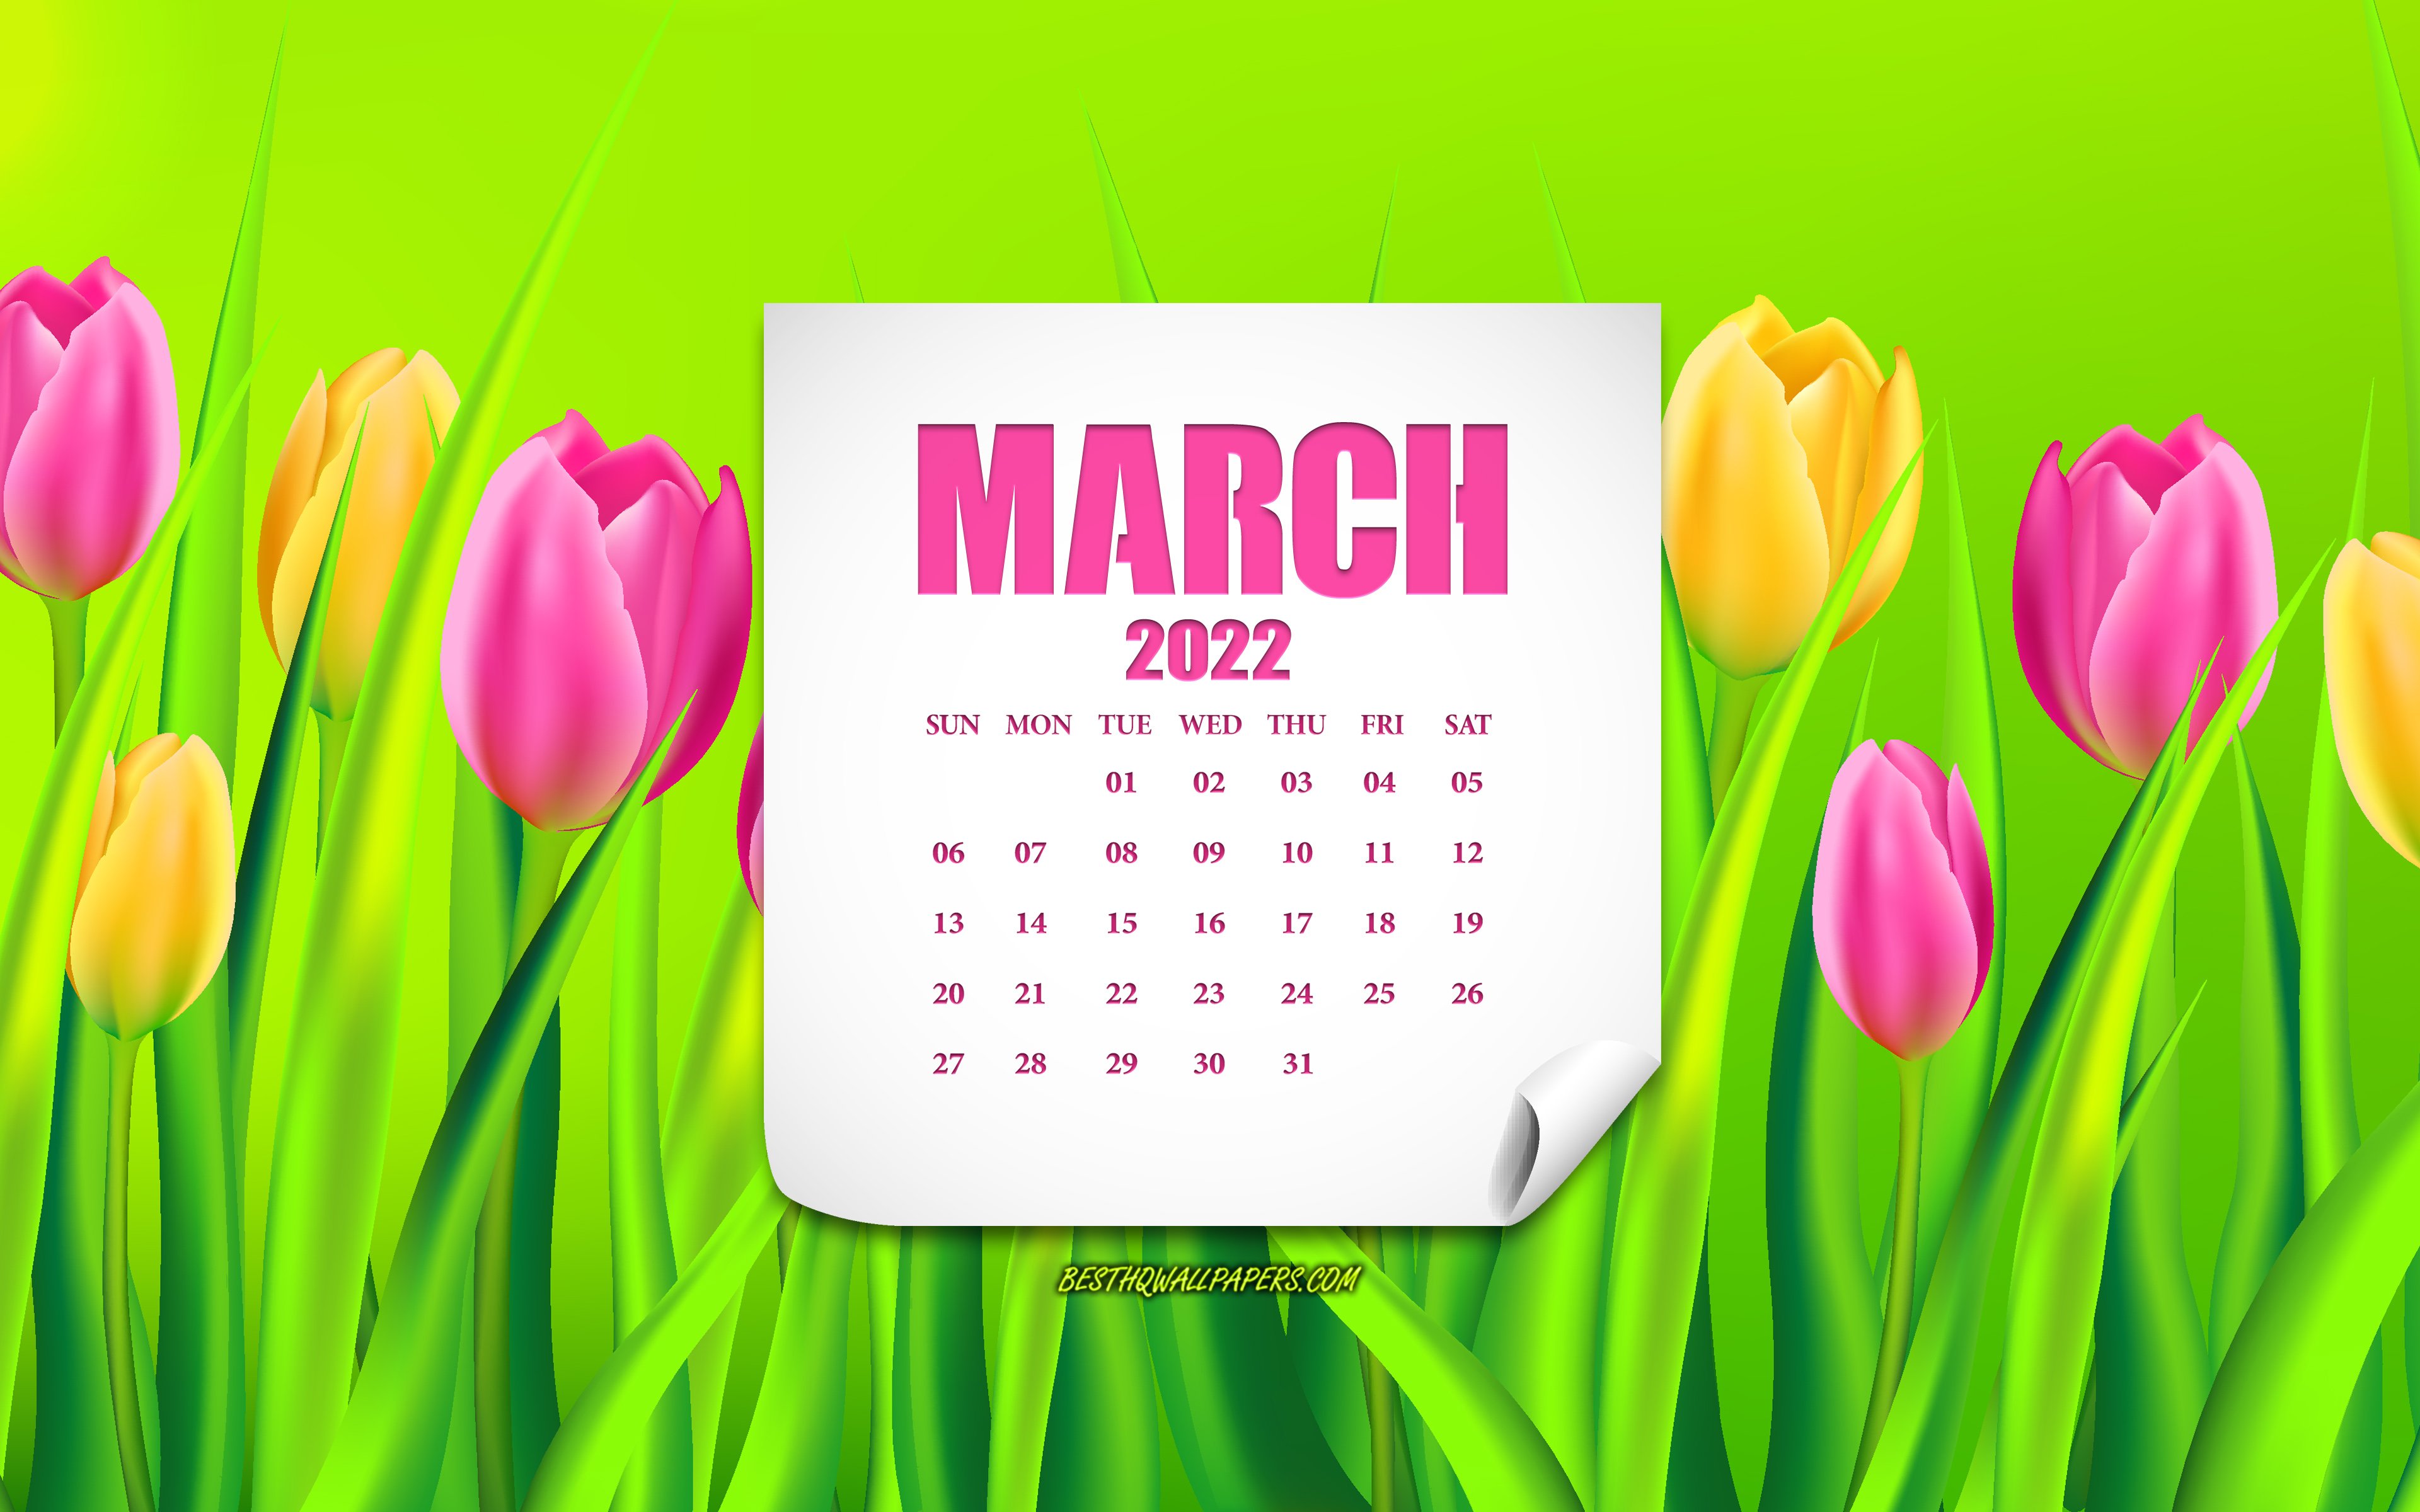 Включи календарь на март. Фон для календаря. Апрель фон для календаря. Обои календарь март.